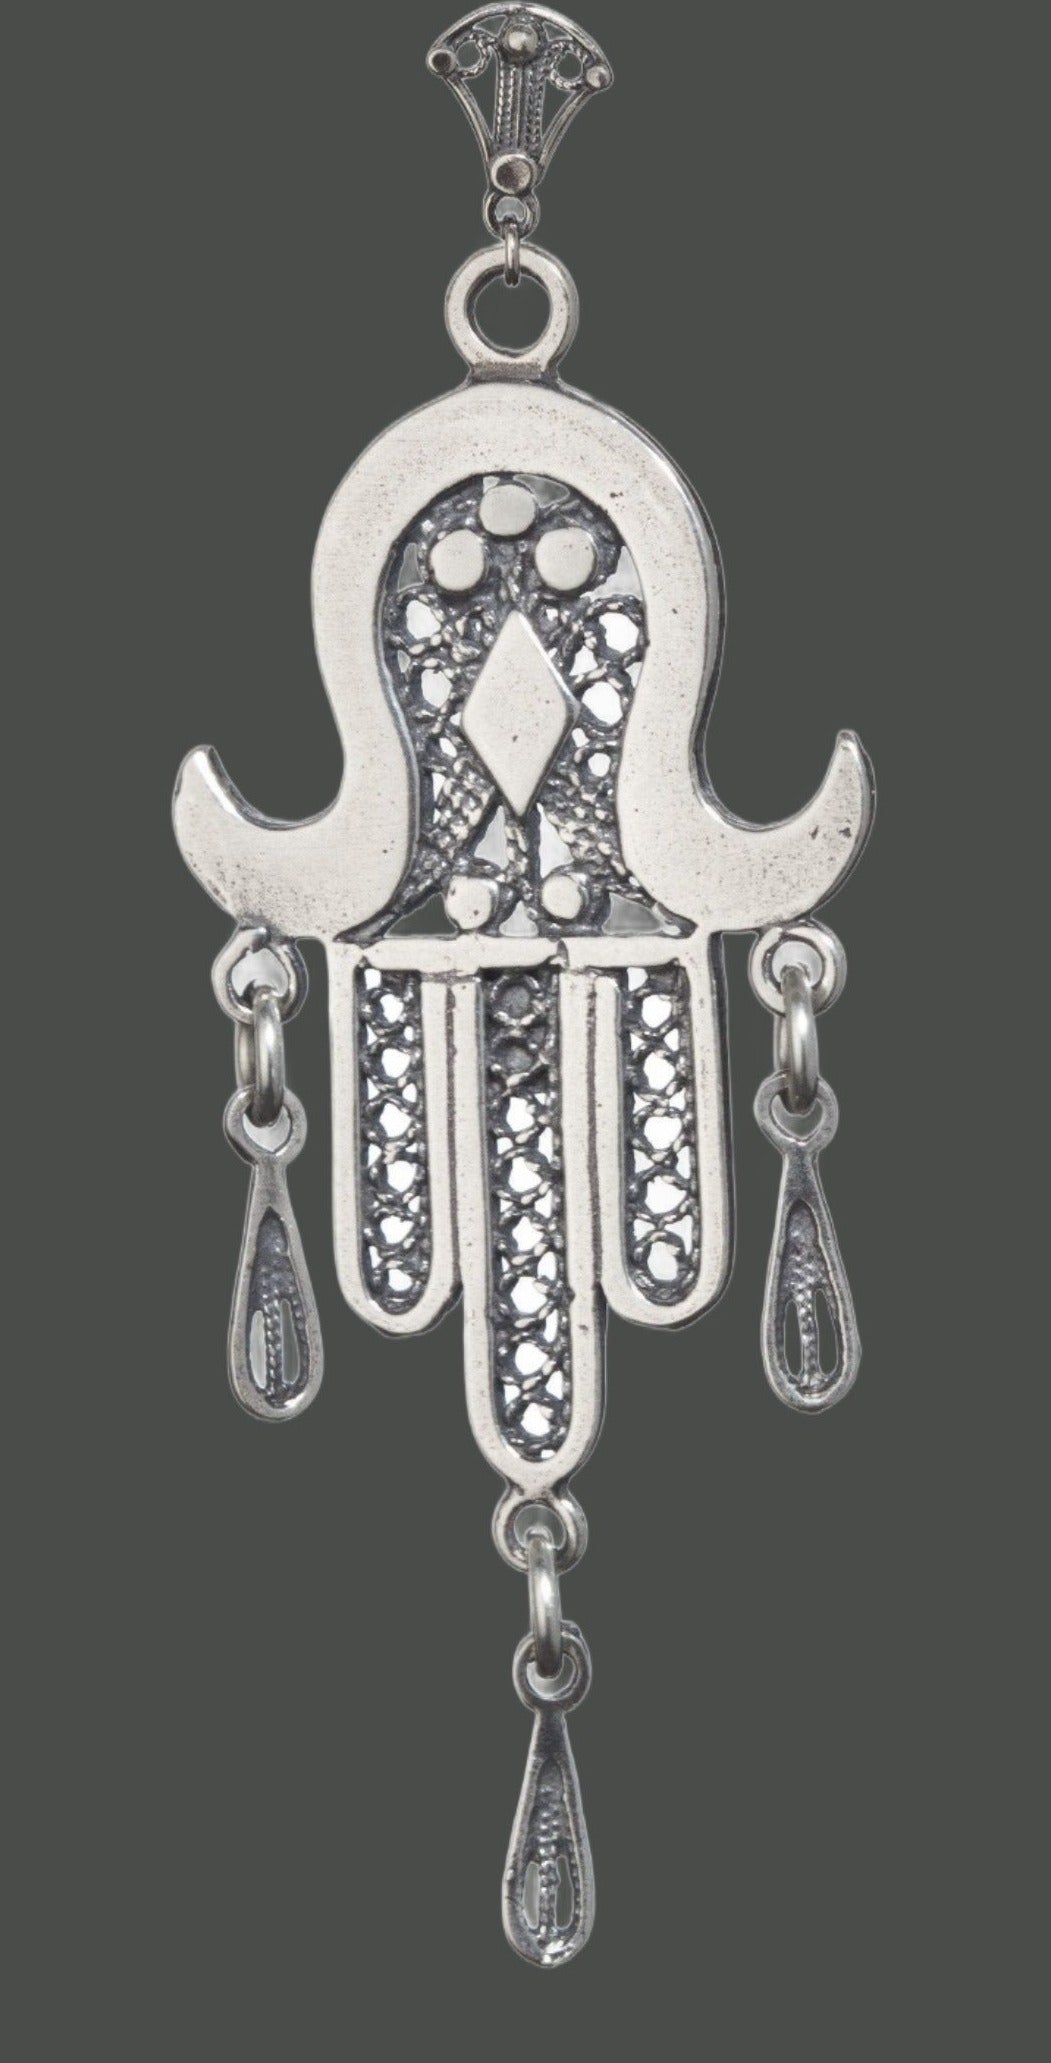 Bluenoemi Jewelry Necklaces 45 cm / silver Silver Hamsa pendant sterling silver 925 ethnic jewelry